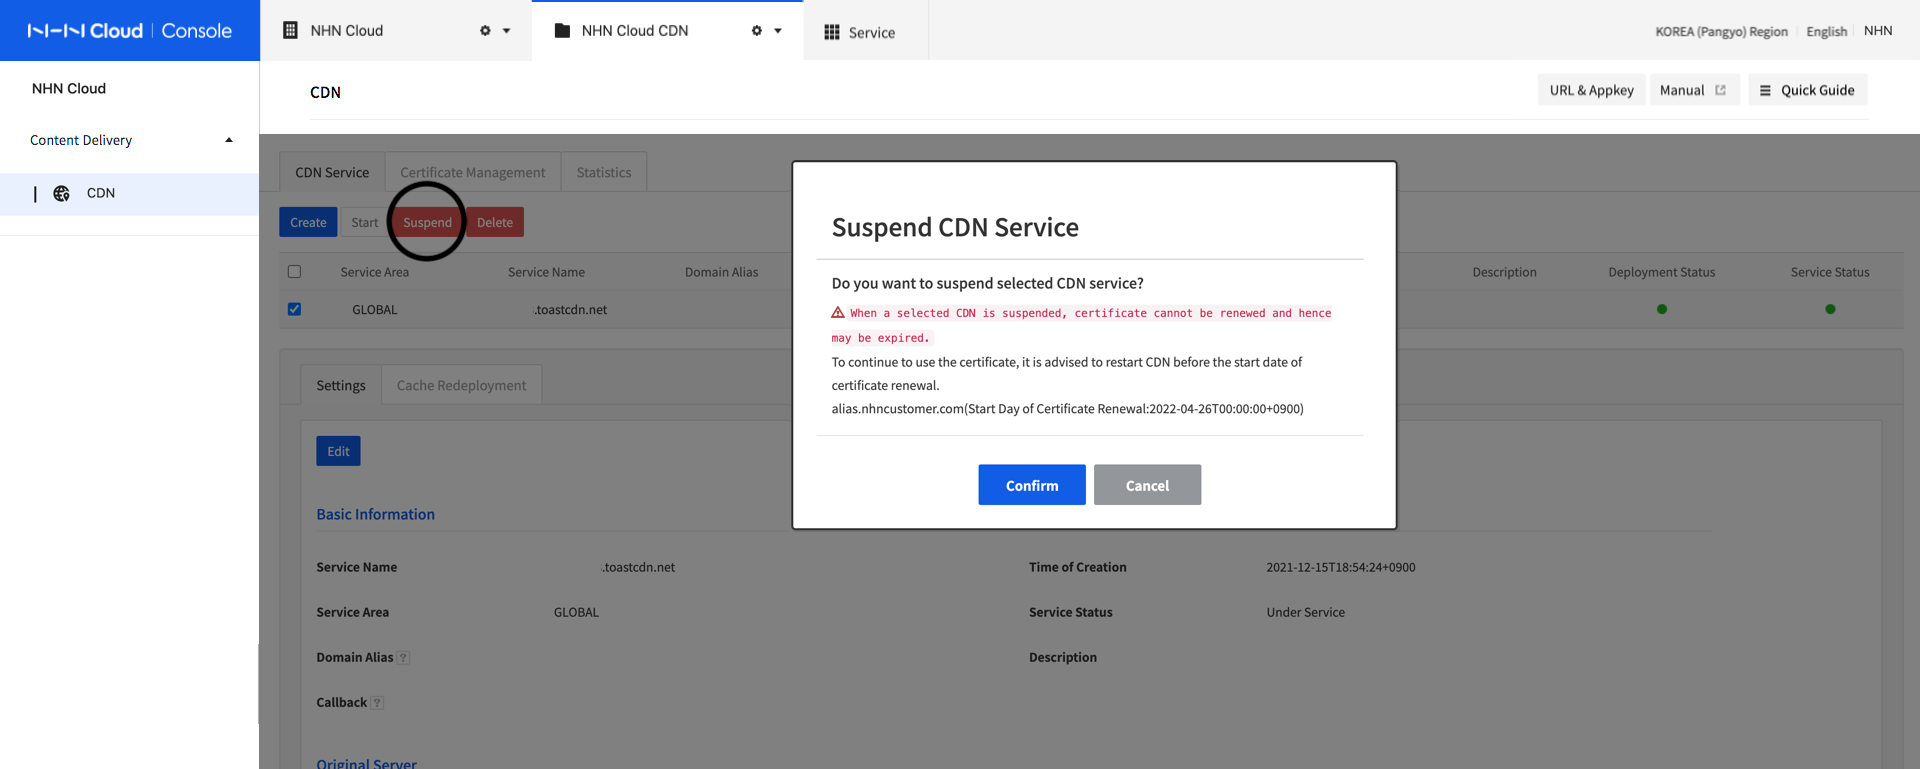 CDN Service- Suspend